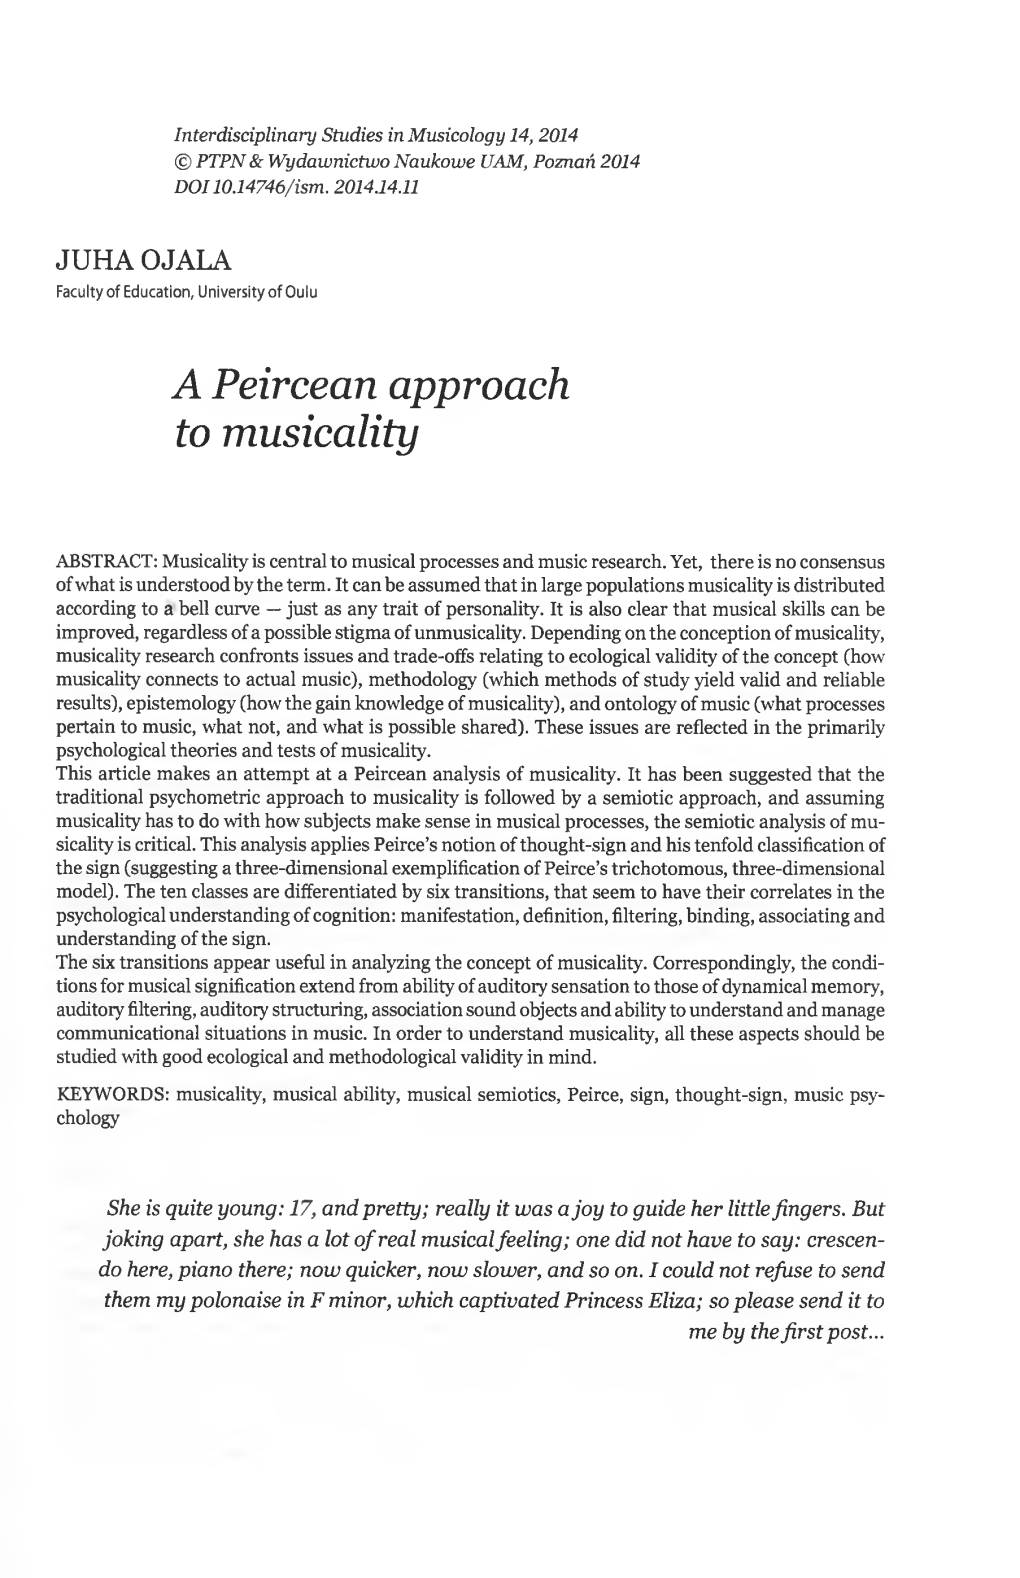 A Peircean Approach to Musicality